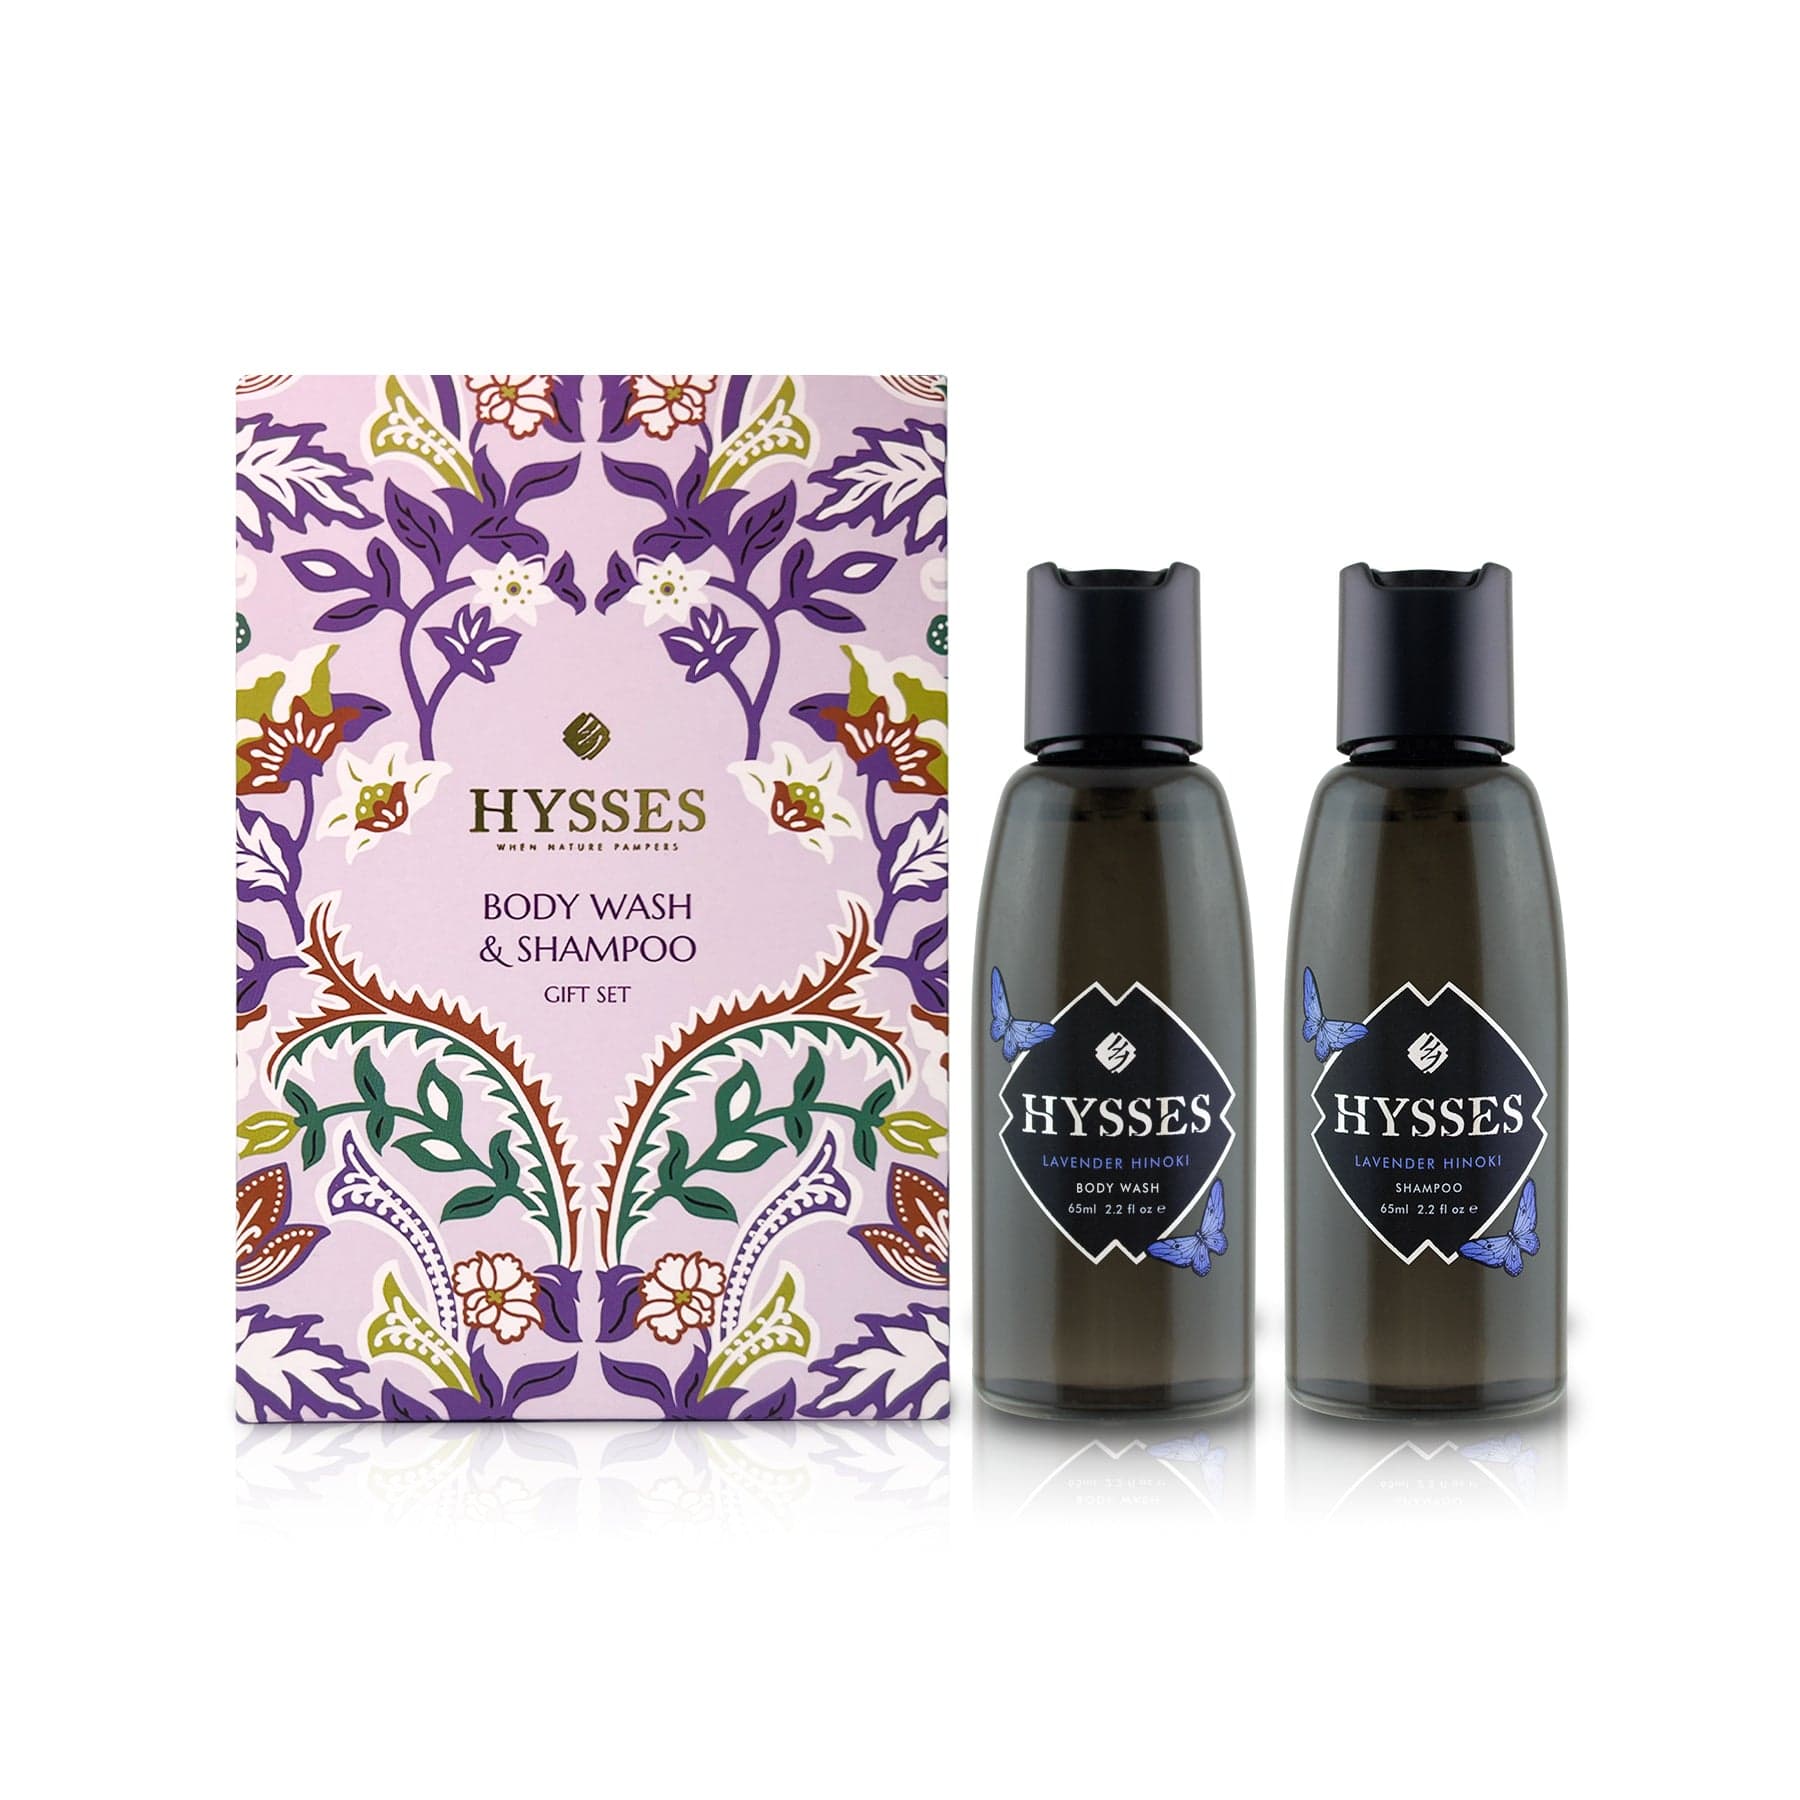 Hysses Body Care Lavender Hinoki Travel Gift Set (Body Wash & Shampoo)